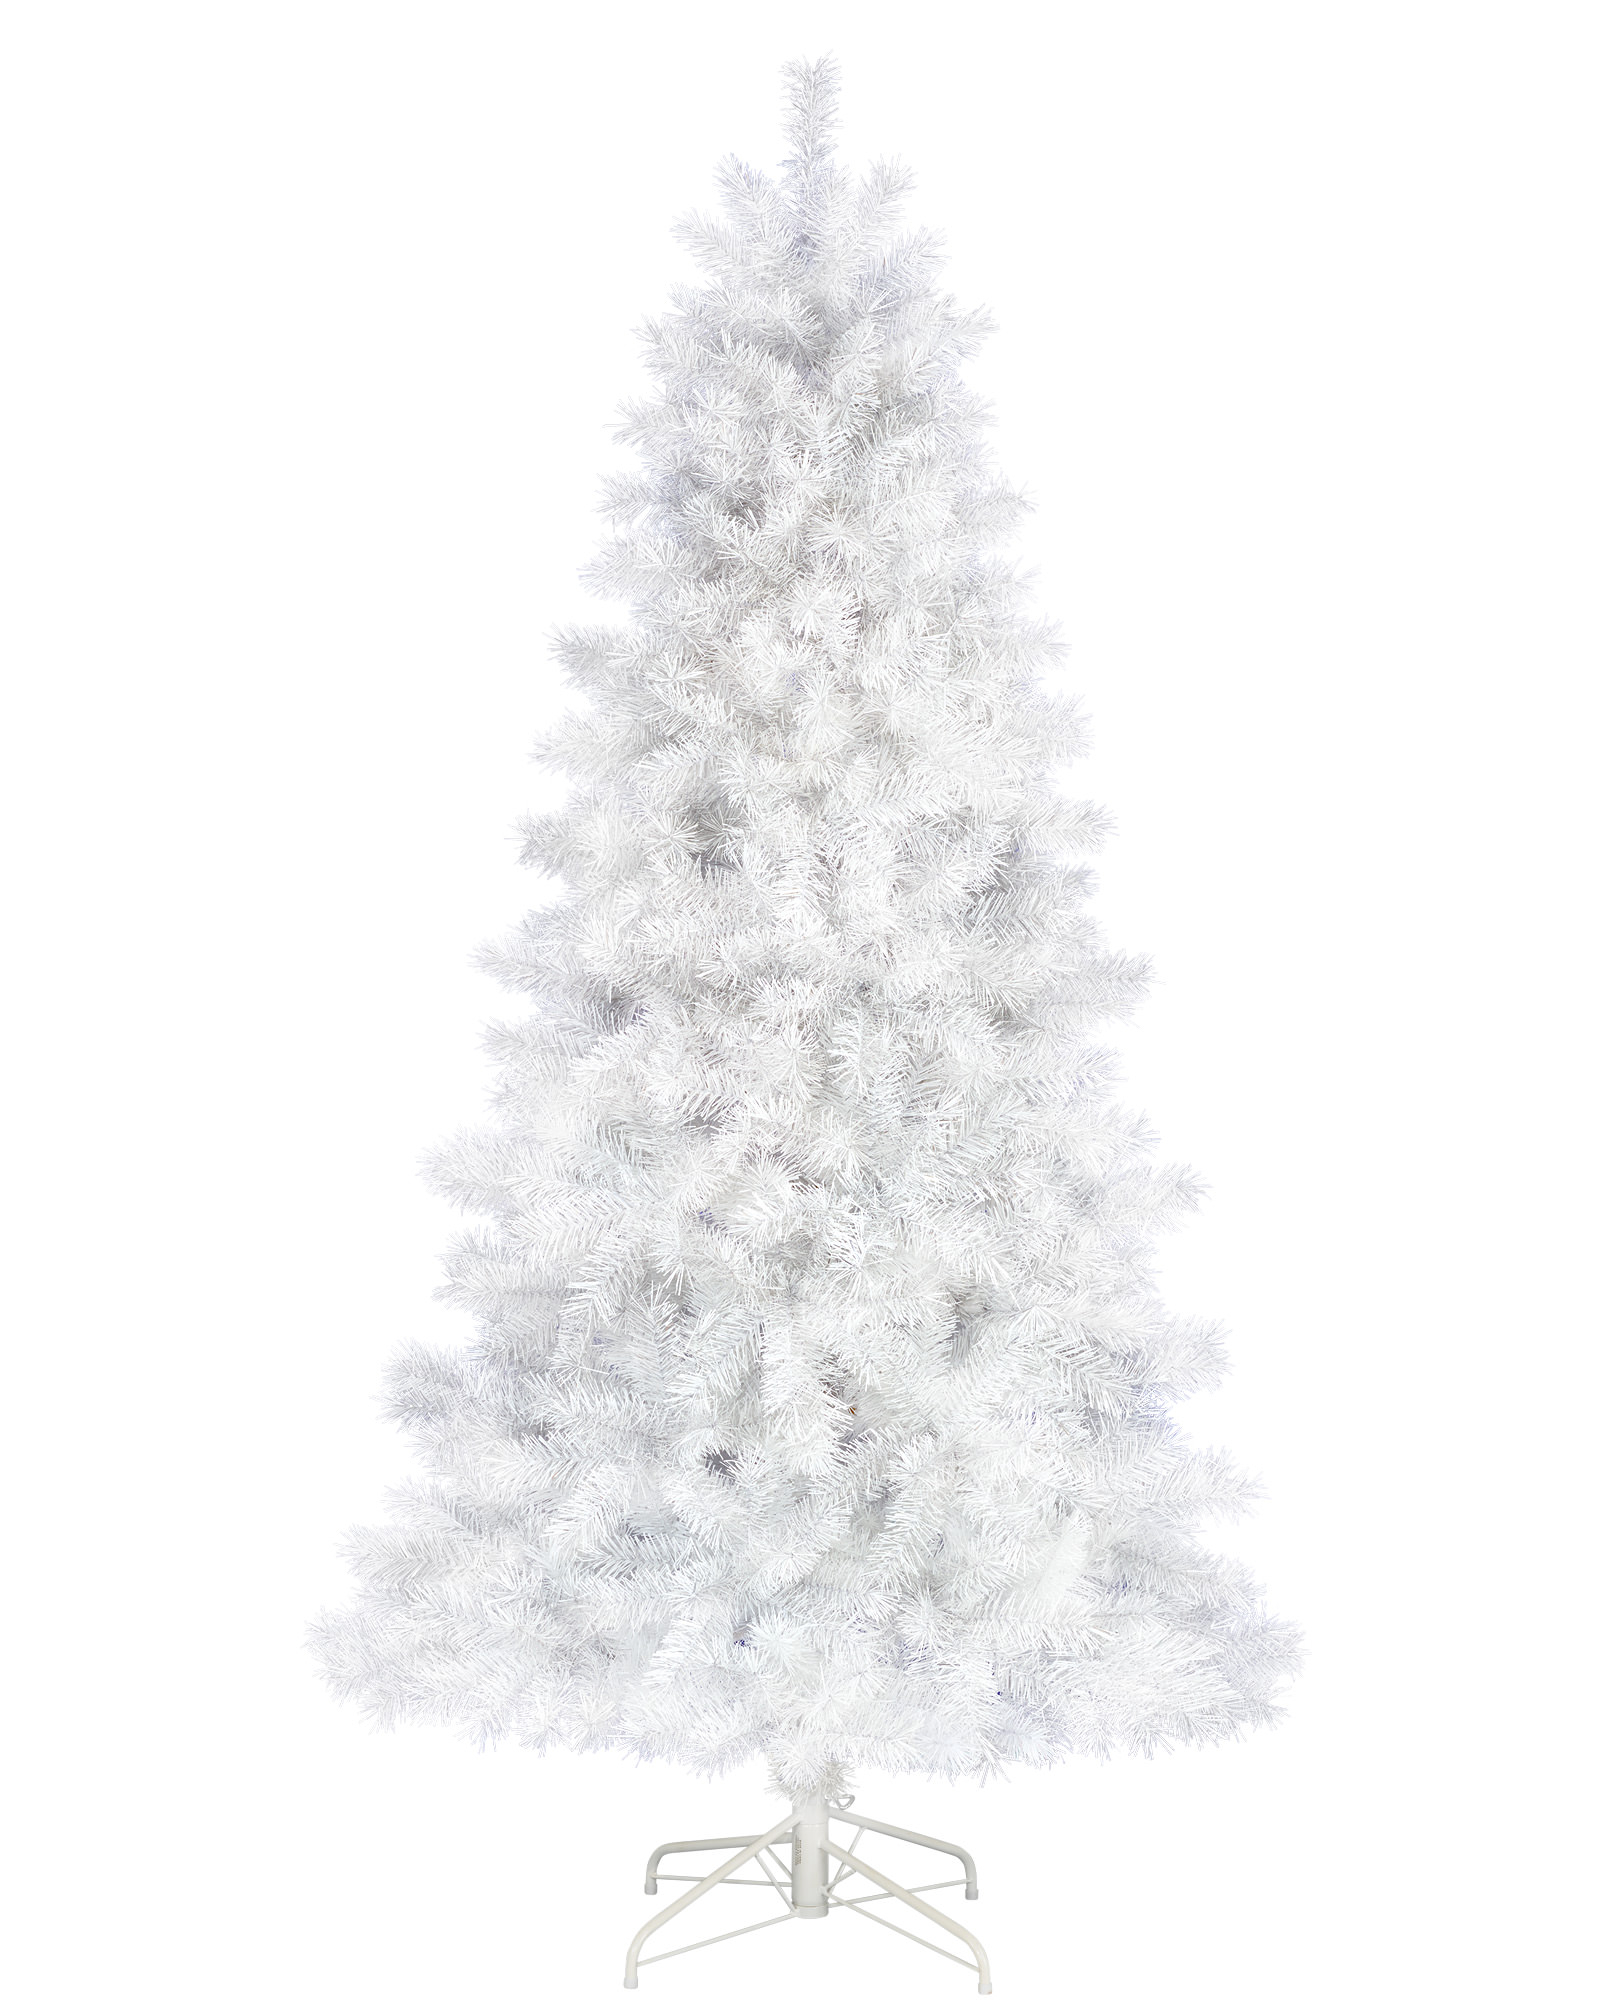 Glimmering White Christmas Tree Treetopia throughout sizing 1600 X 2000